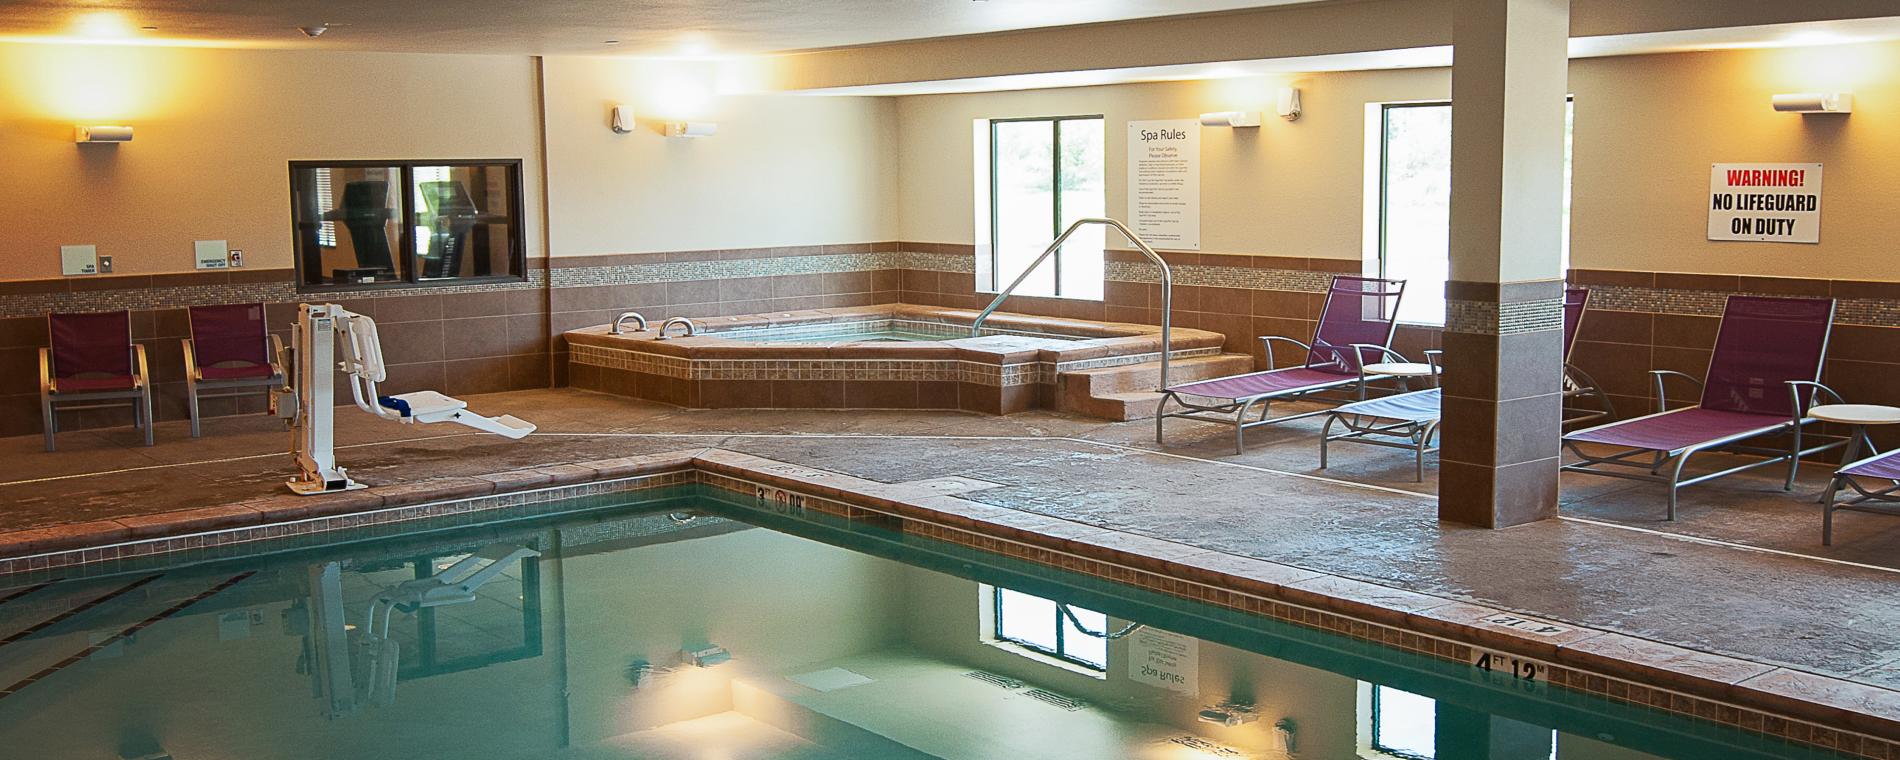 Holiday Inn Exp NE Pool Visit Wichita